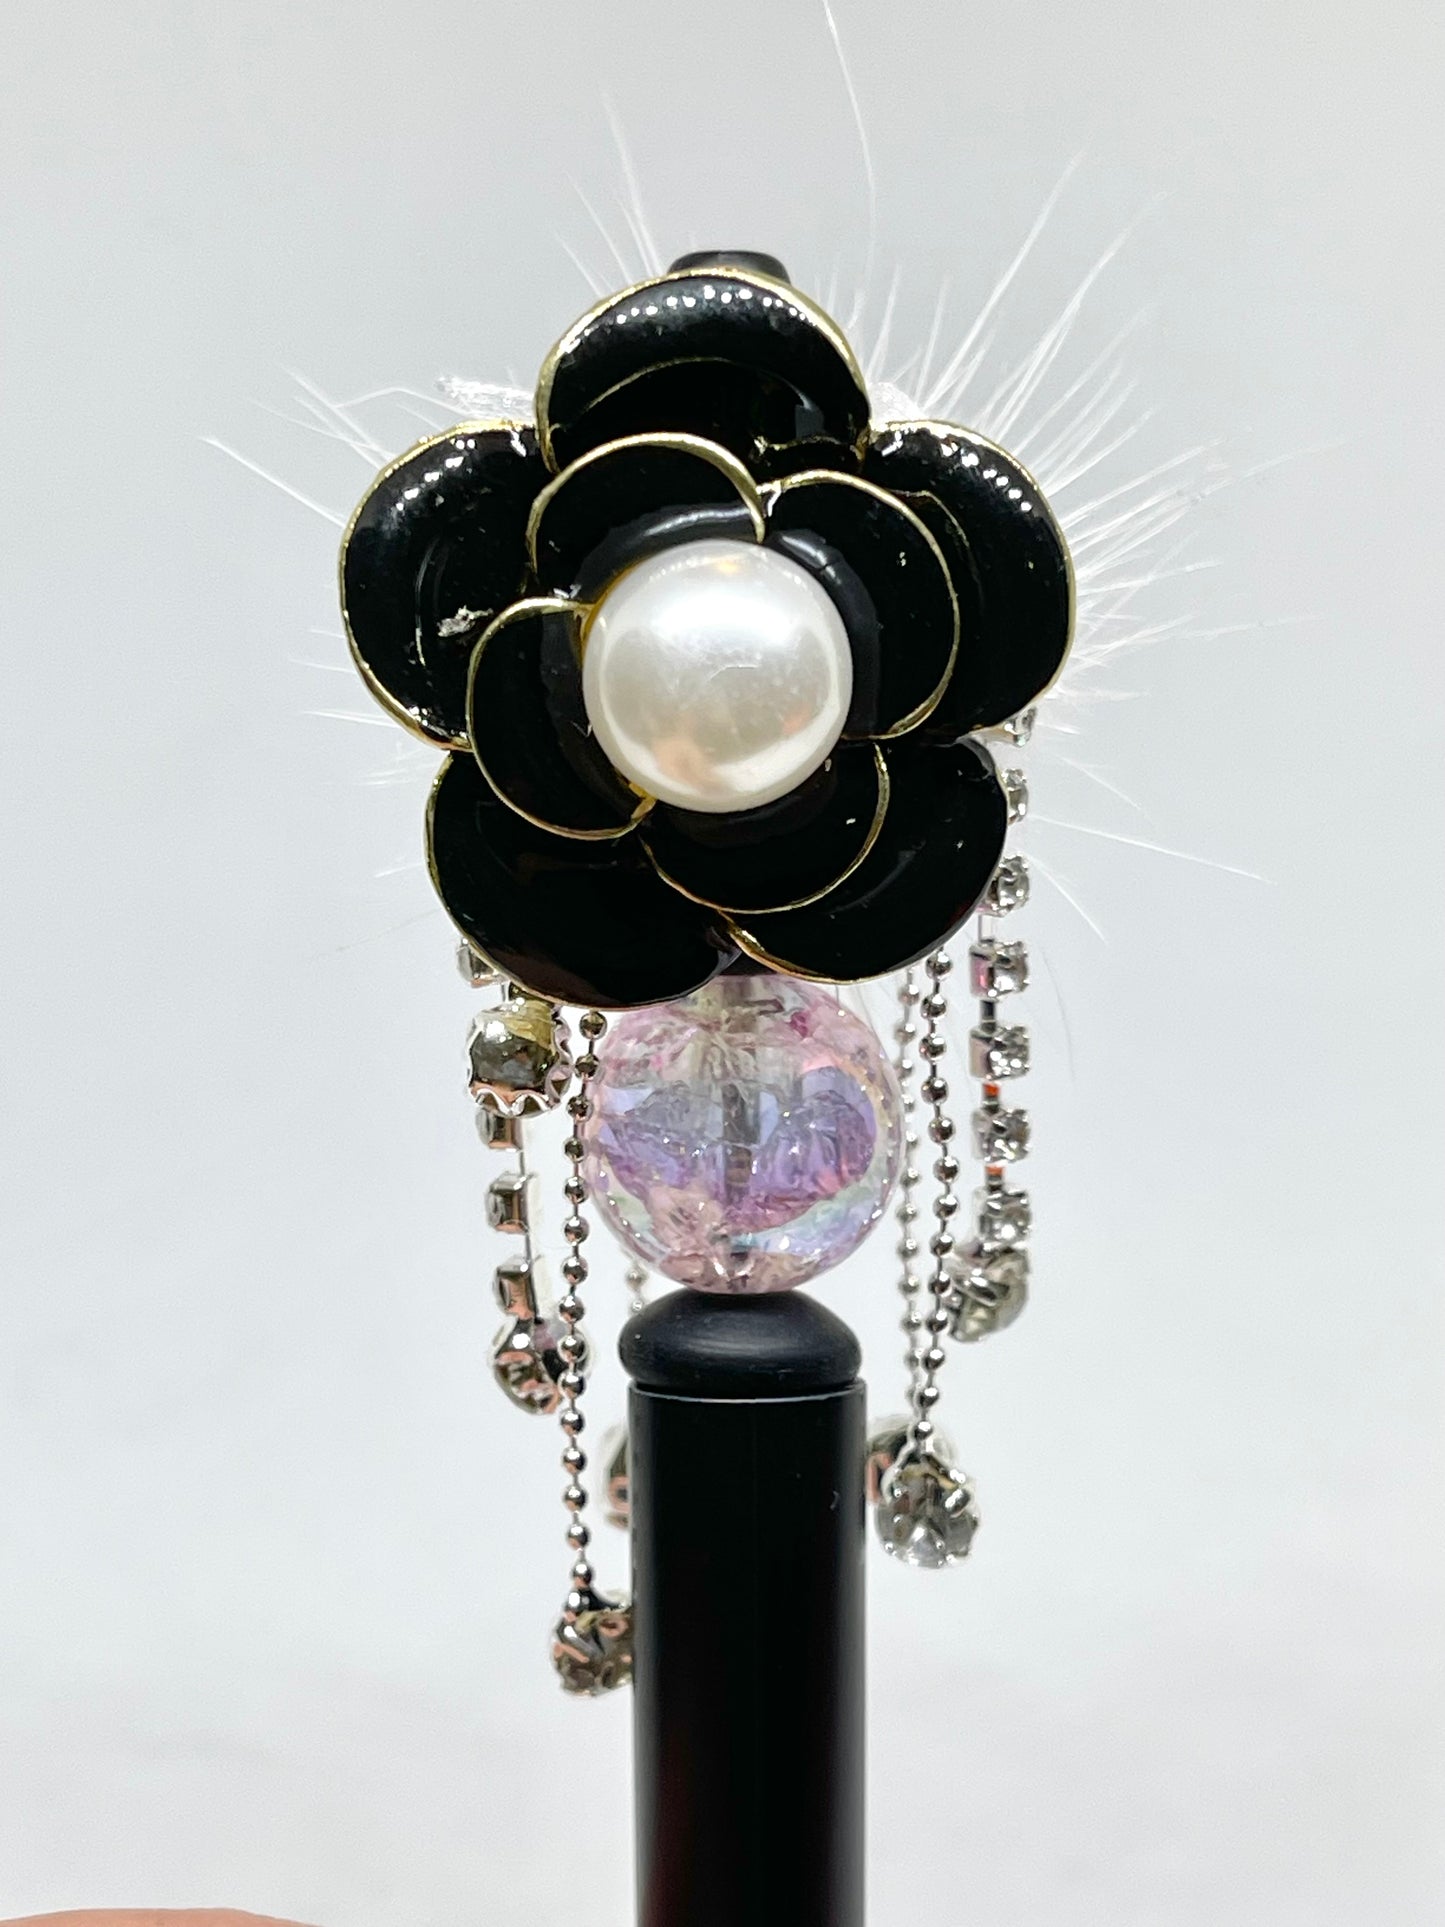 Rose's Flower Luxury Beads | Luxury beads | Rhinestone Beads | High Quality Beads